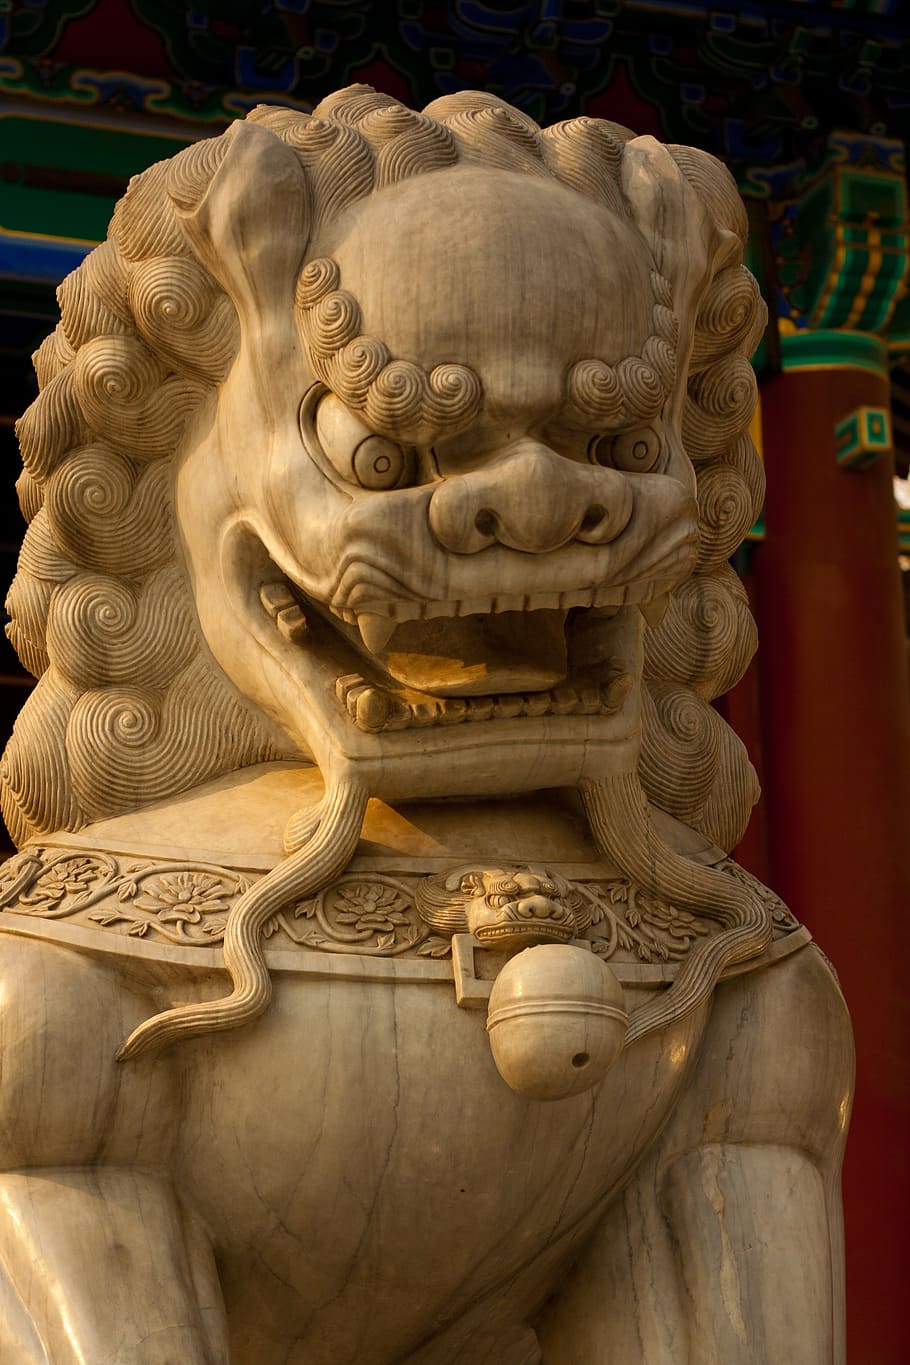 beige, estatua del perro foo, asiático, chino, china, estatua, perro, león, dragón, escultura